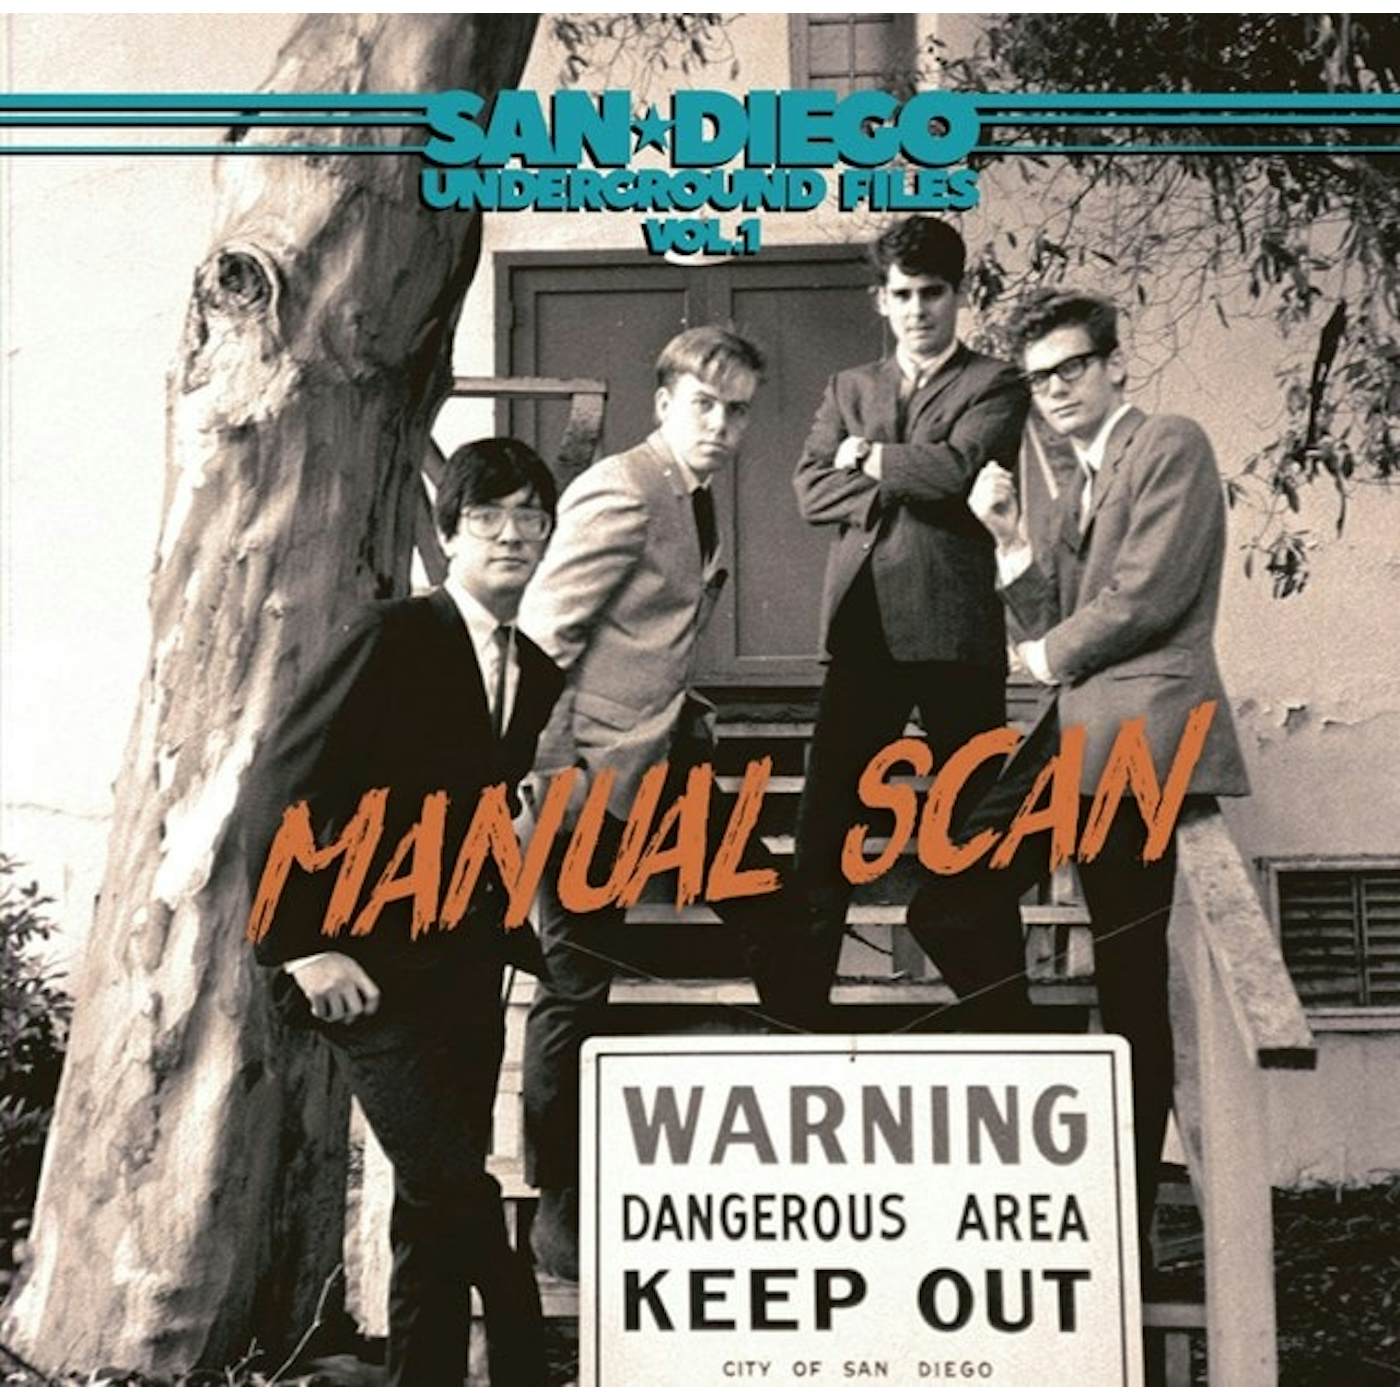 Manual Scan SAN DIEGO UNDERGROUND FILES VOL 1 Vinyl Record